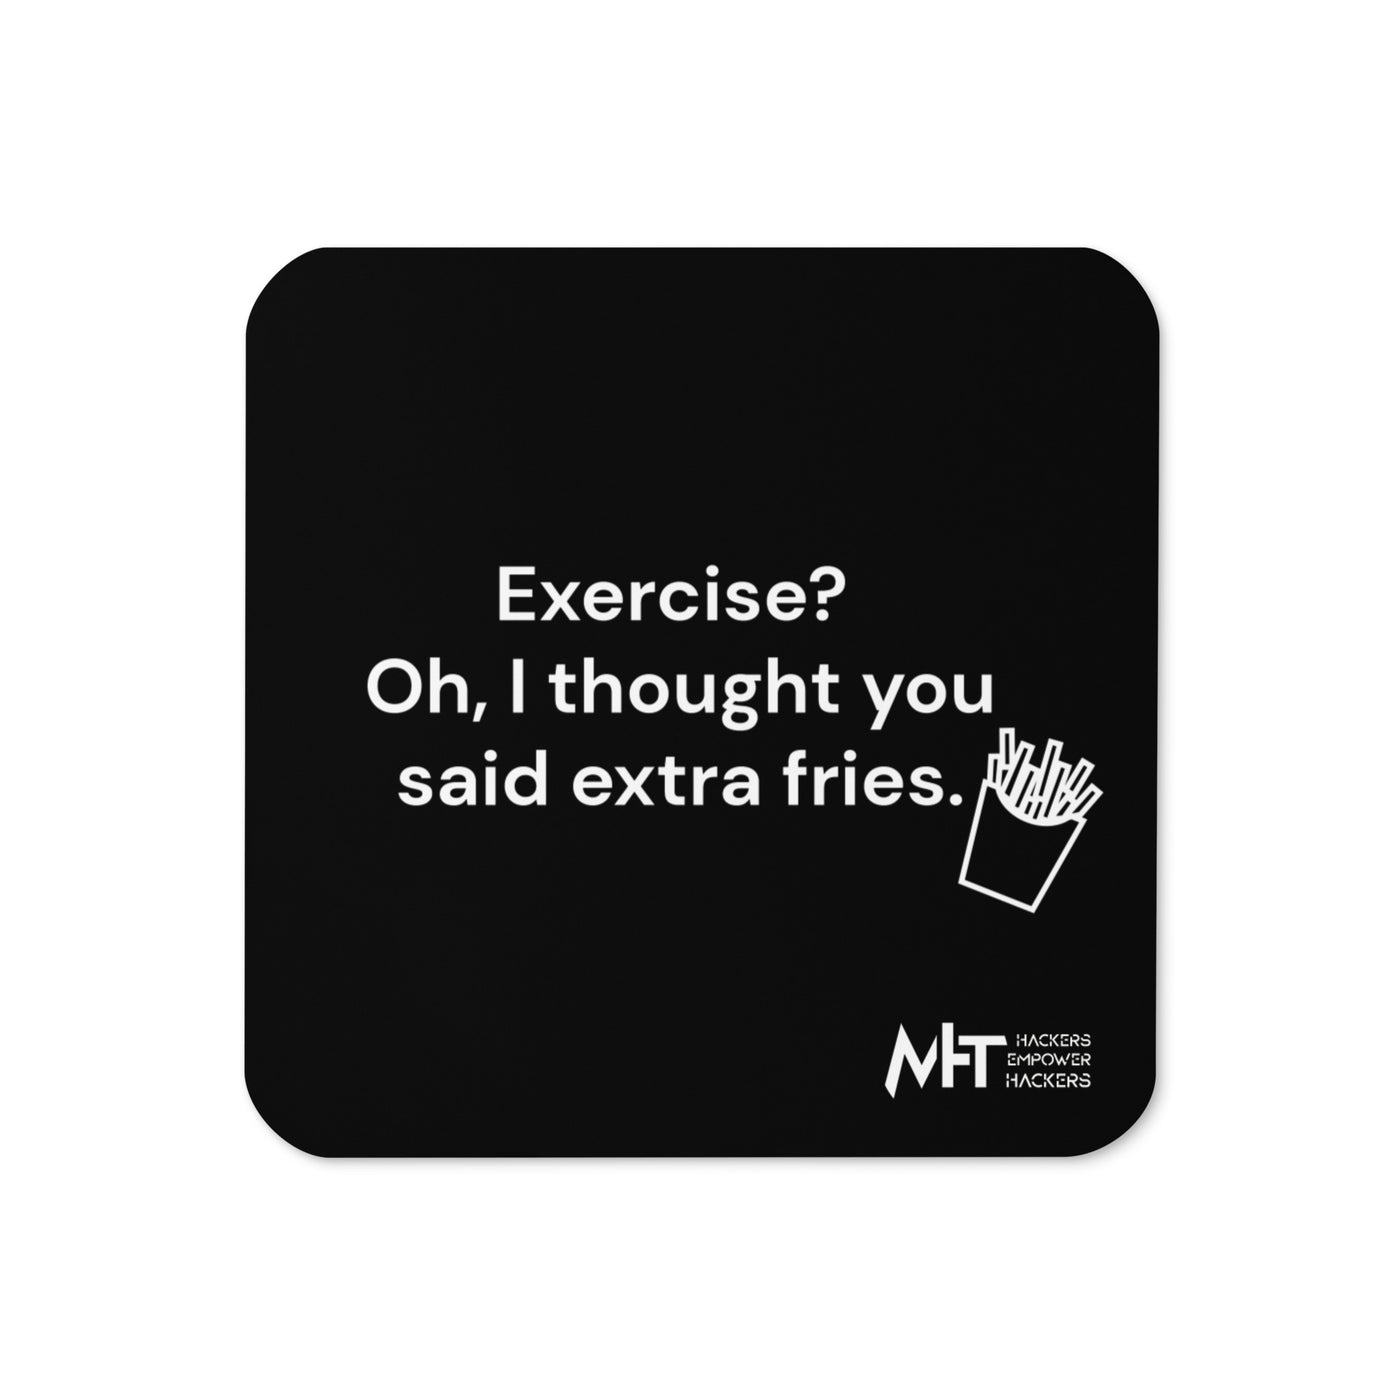 Exercise? Oh, I thought you said extra fries - Cork-back coaster